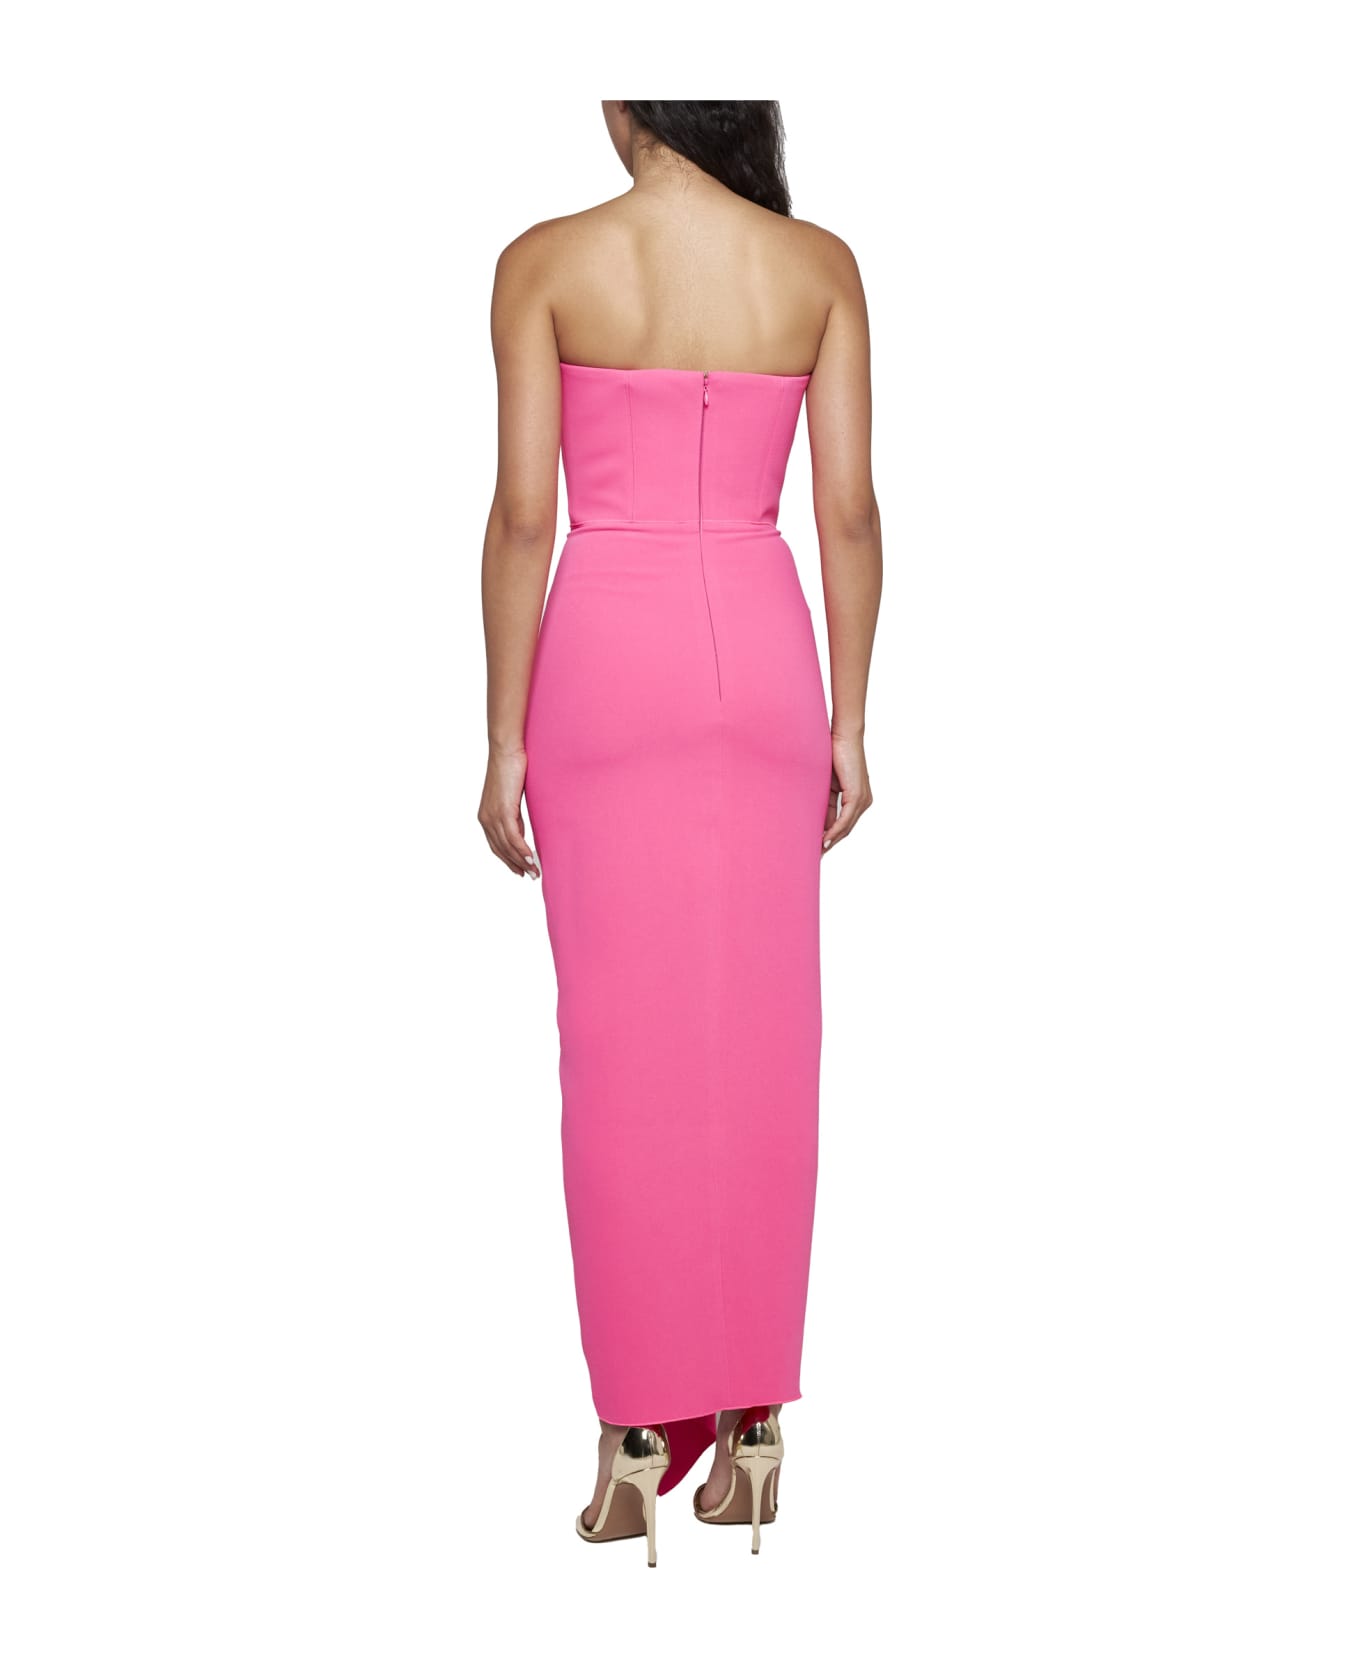 Solace London Dress - Ultra pink